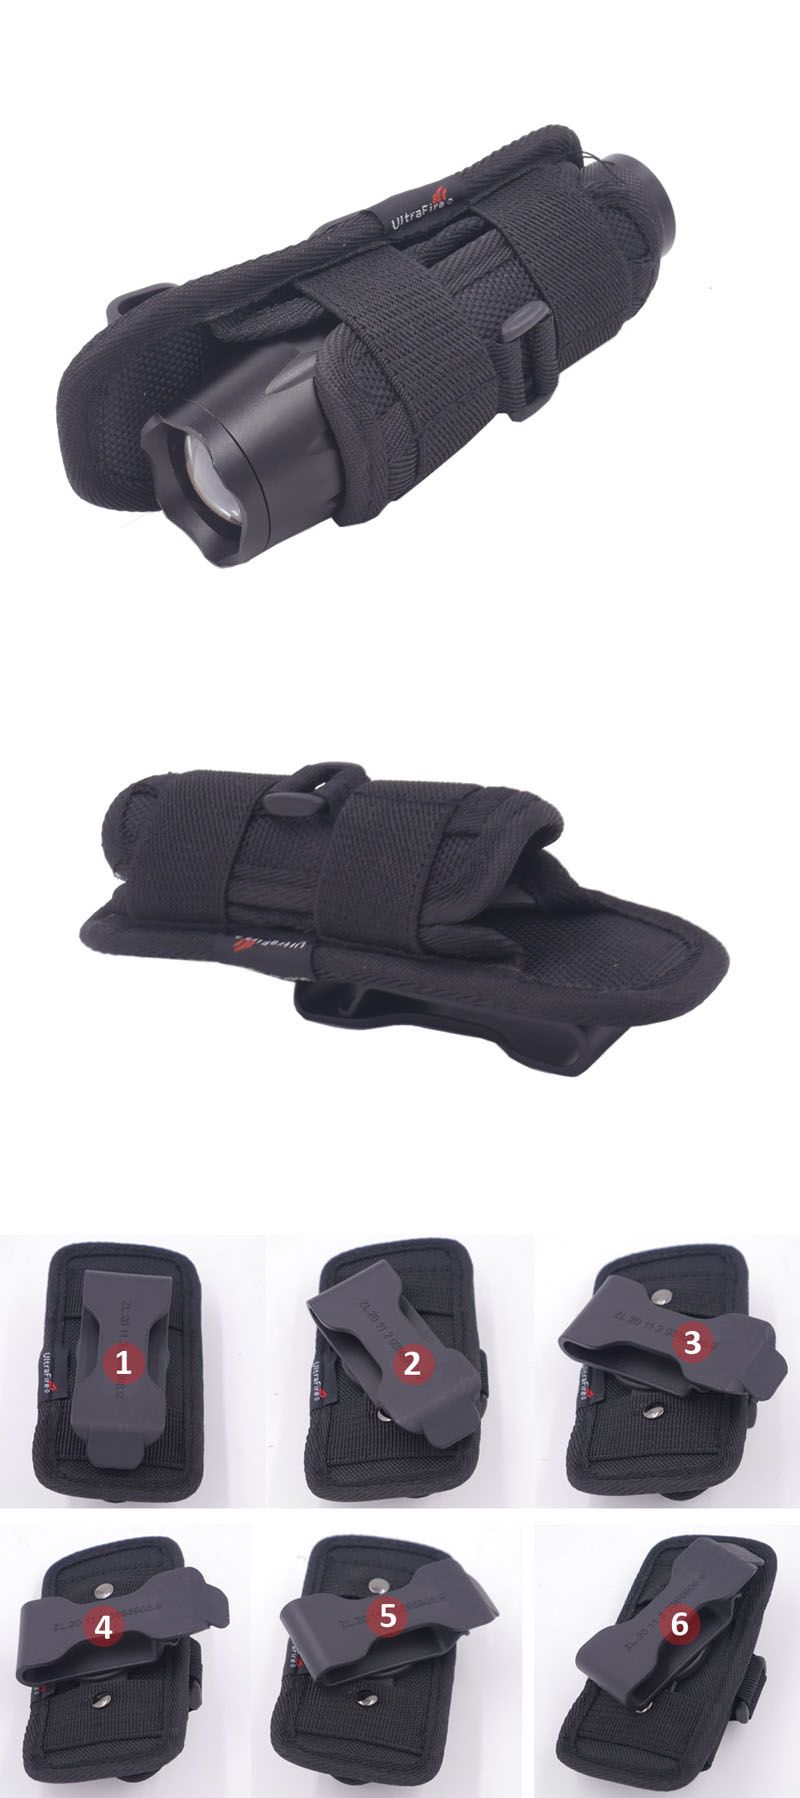 UltraFire-401402-120150mm-Flashlight-Protected-Bag-Flashlight-Holster-Flashlight-Accessories-Camping-1554954